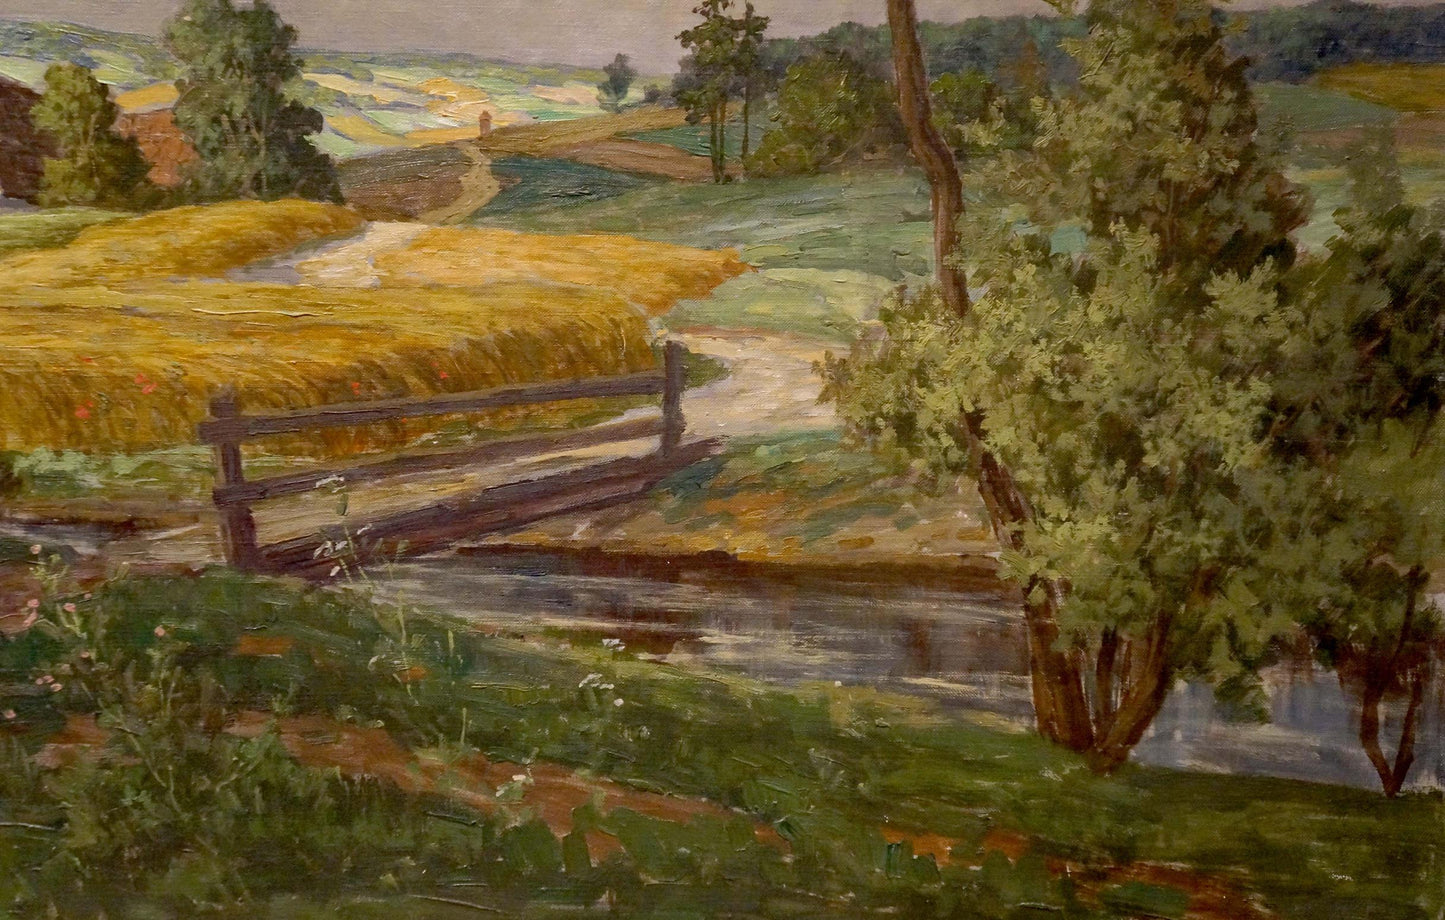 Oil painting Landscape of the village Pawlitschek